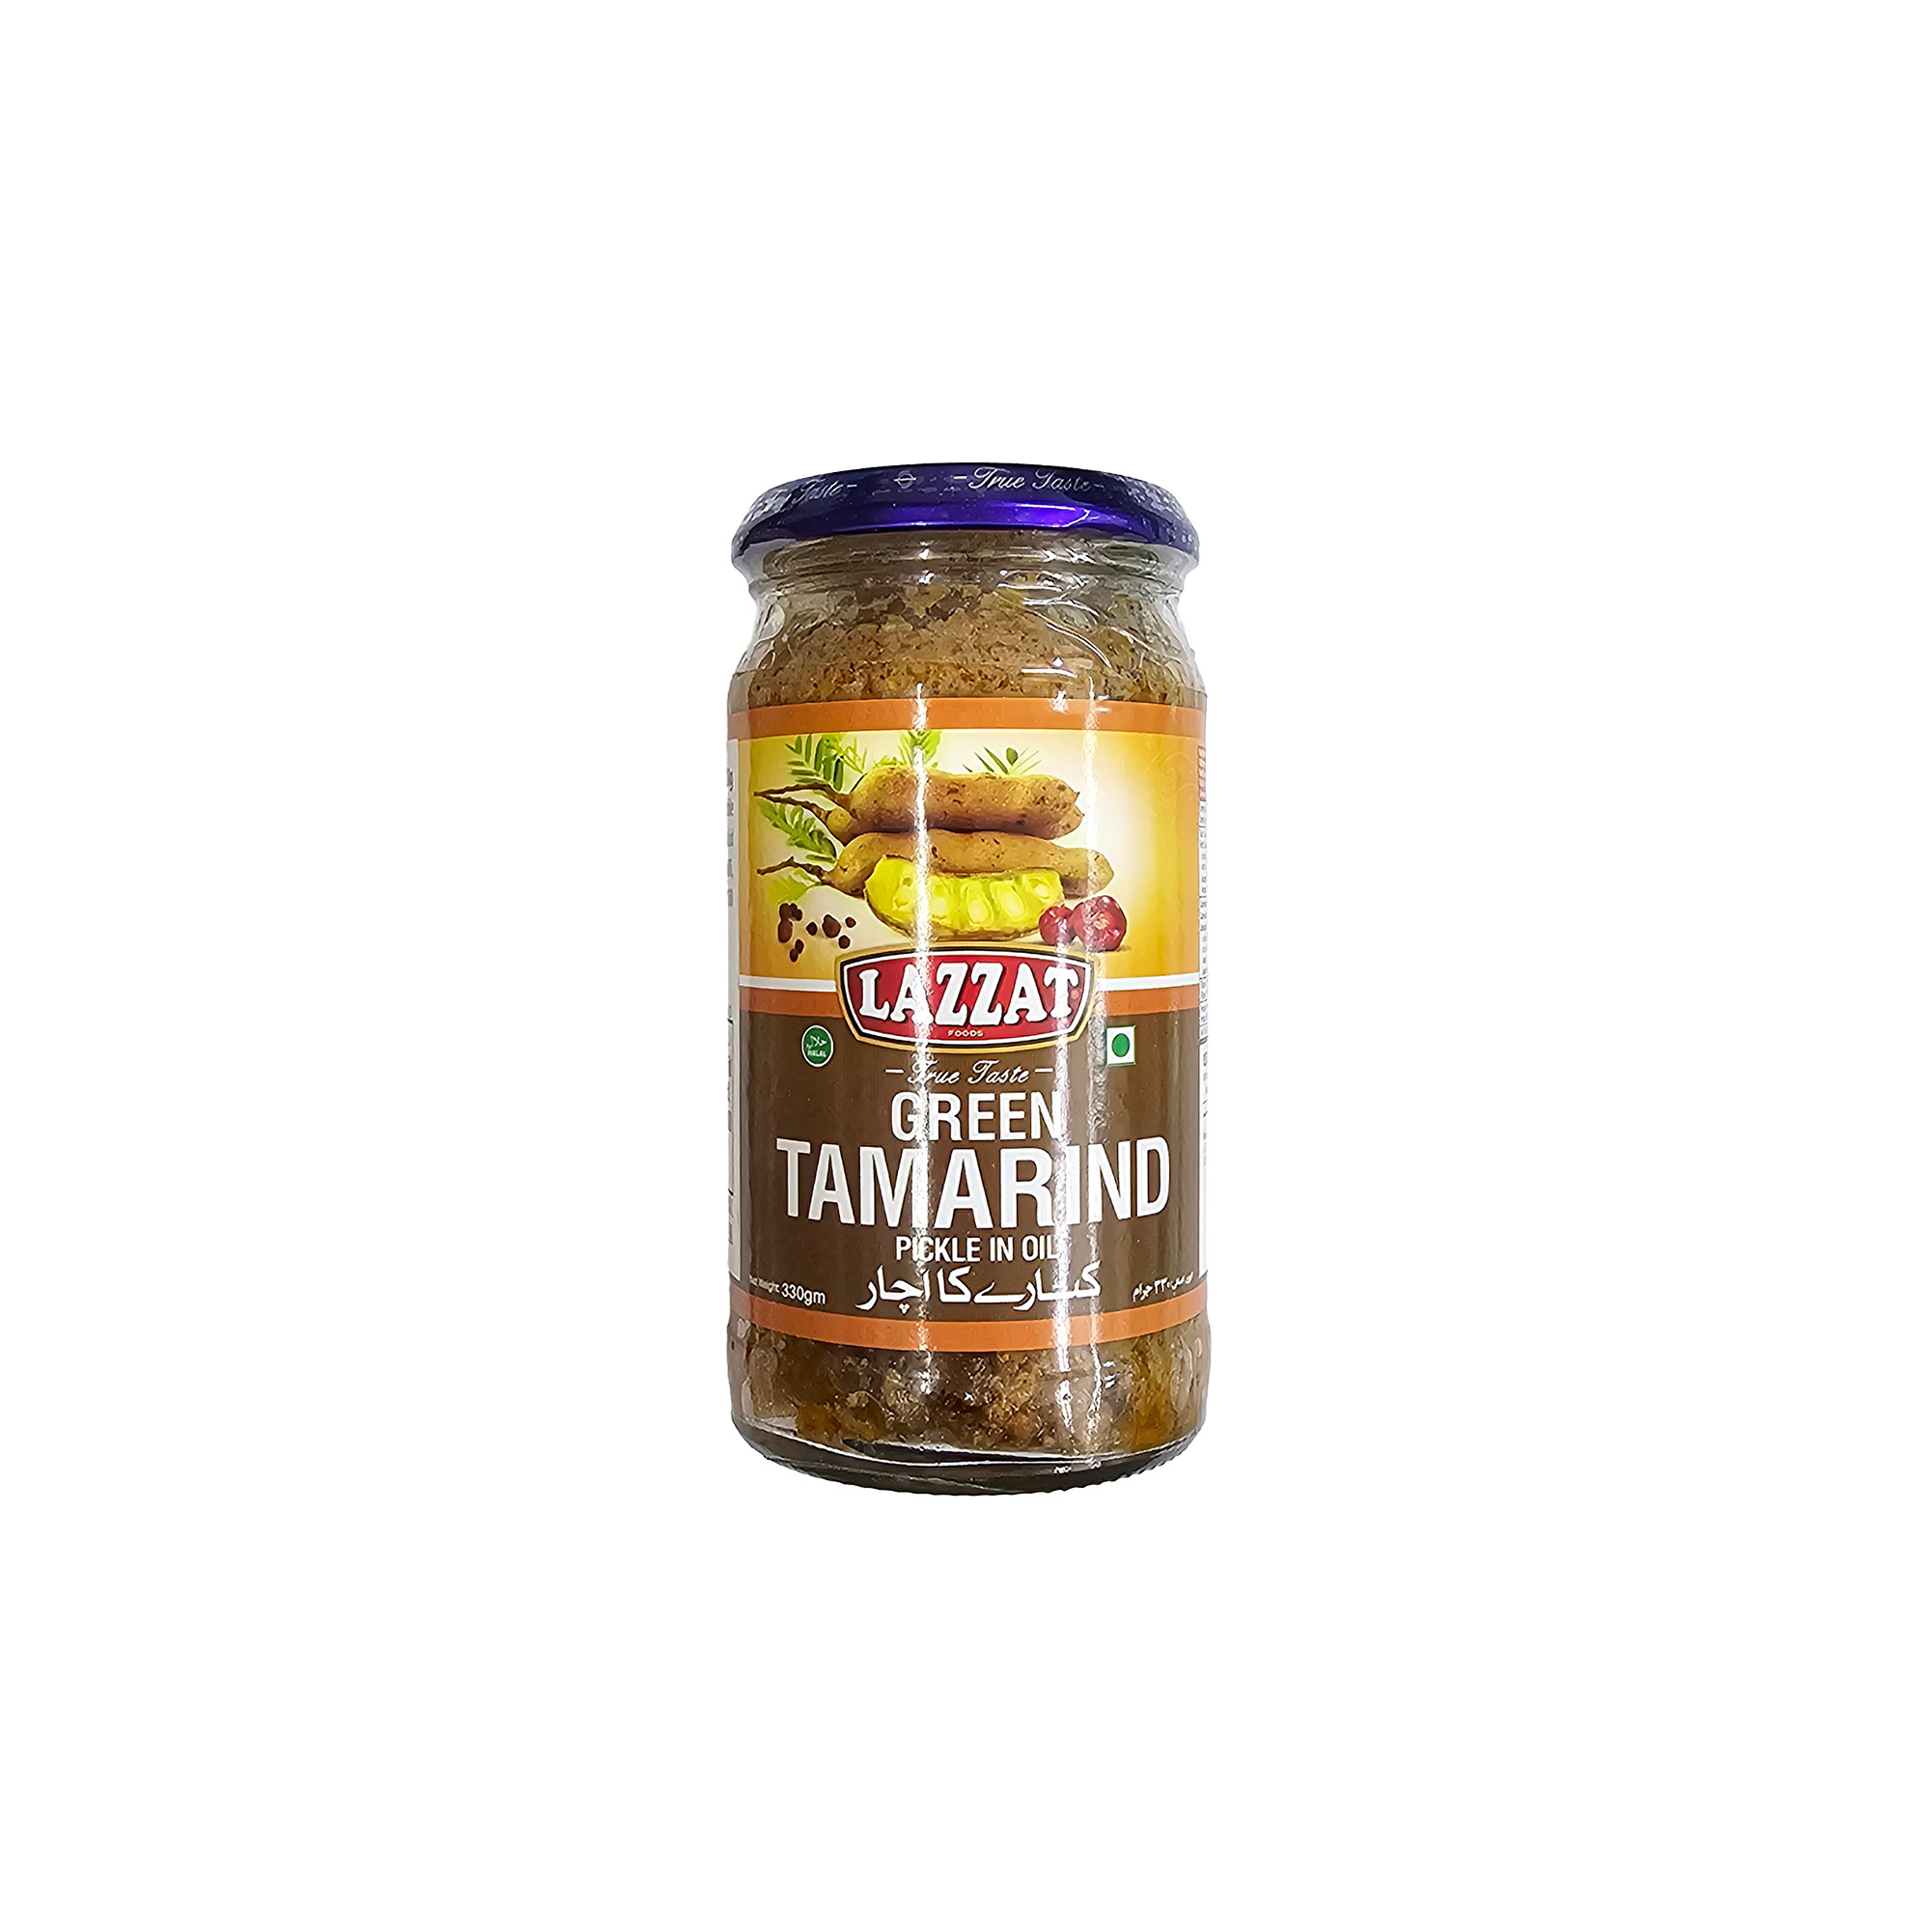 Green Tamarind Pickle In Oil (Lazzat)